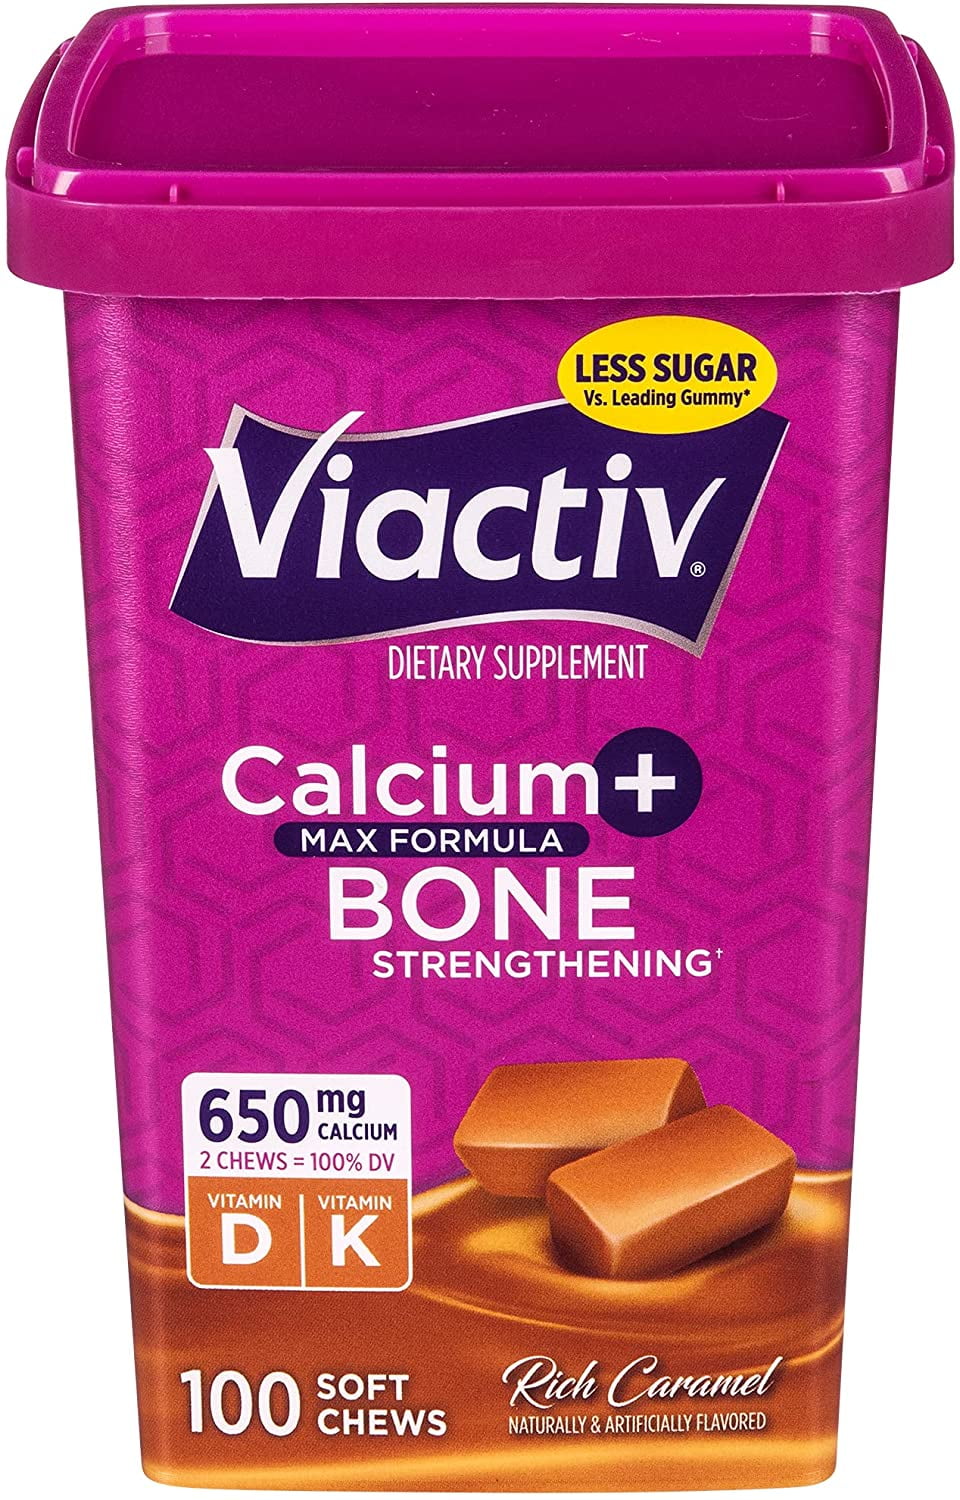 Viactiv Calcium + Vitamin D Supplement Soft Chews, Caramel, 100-Count